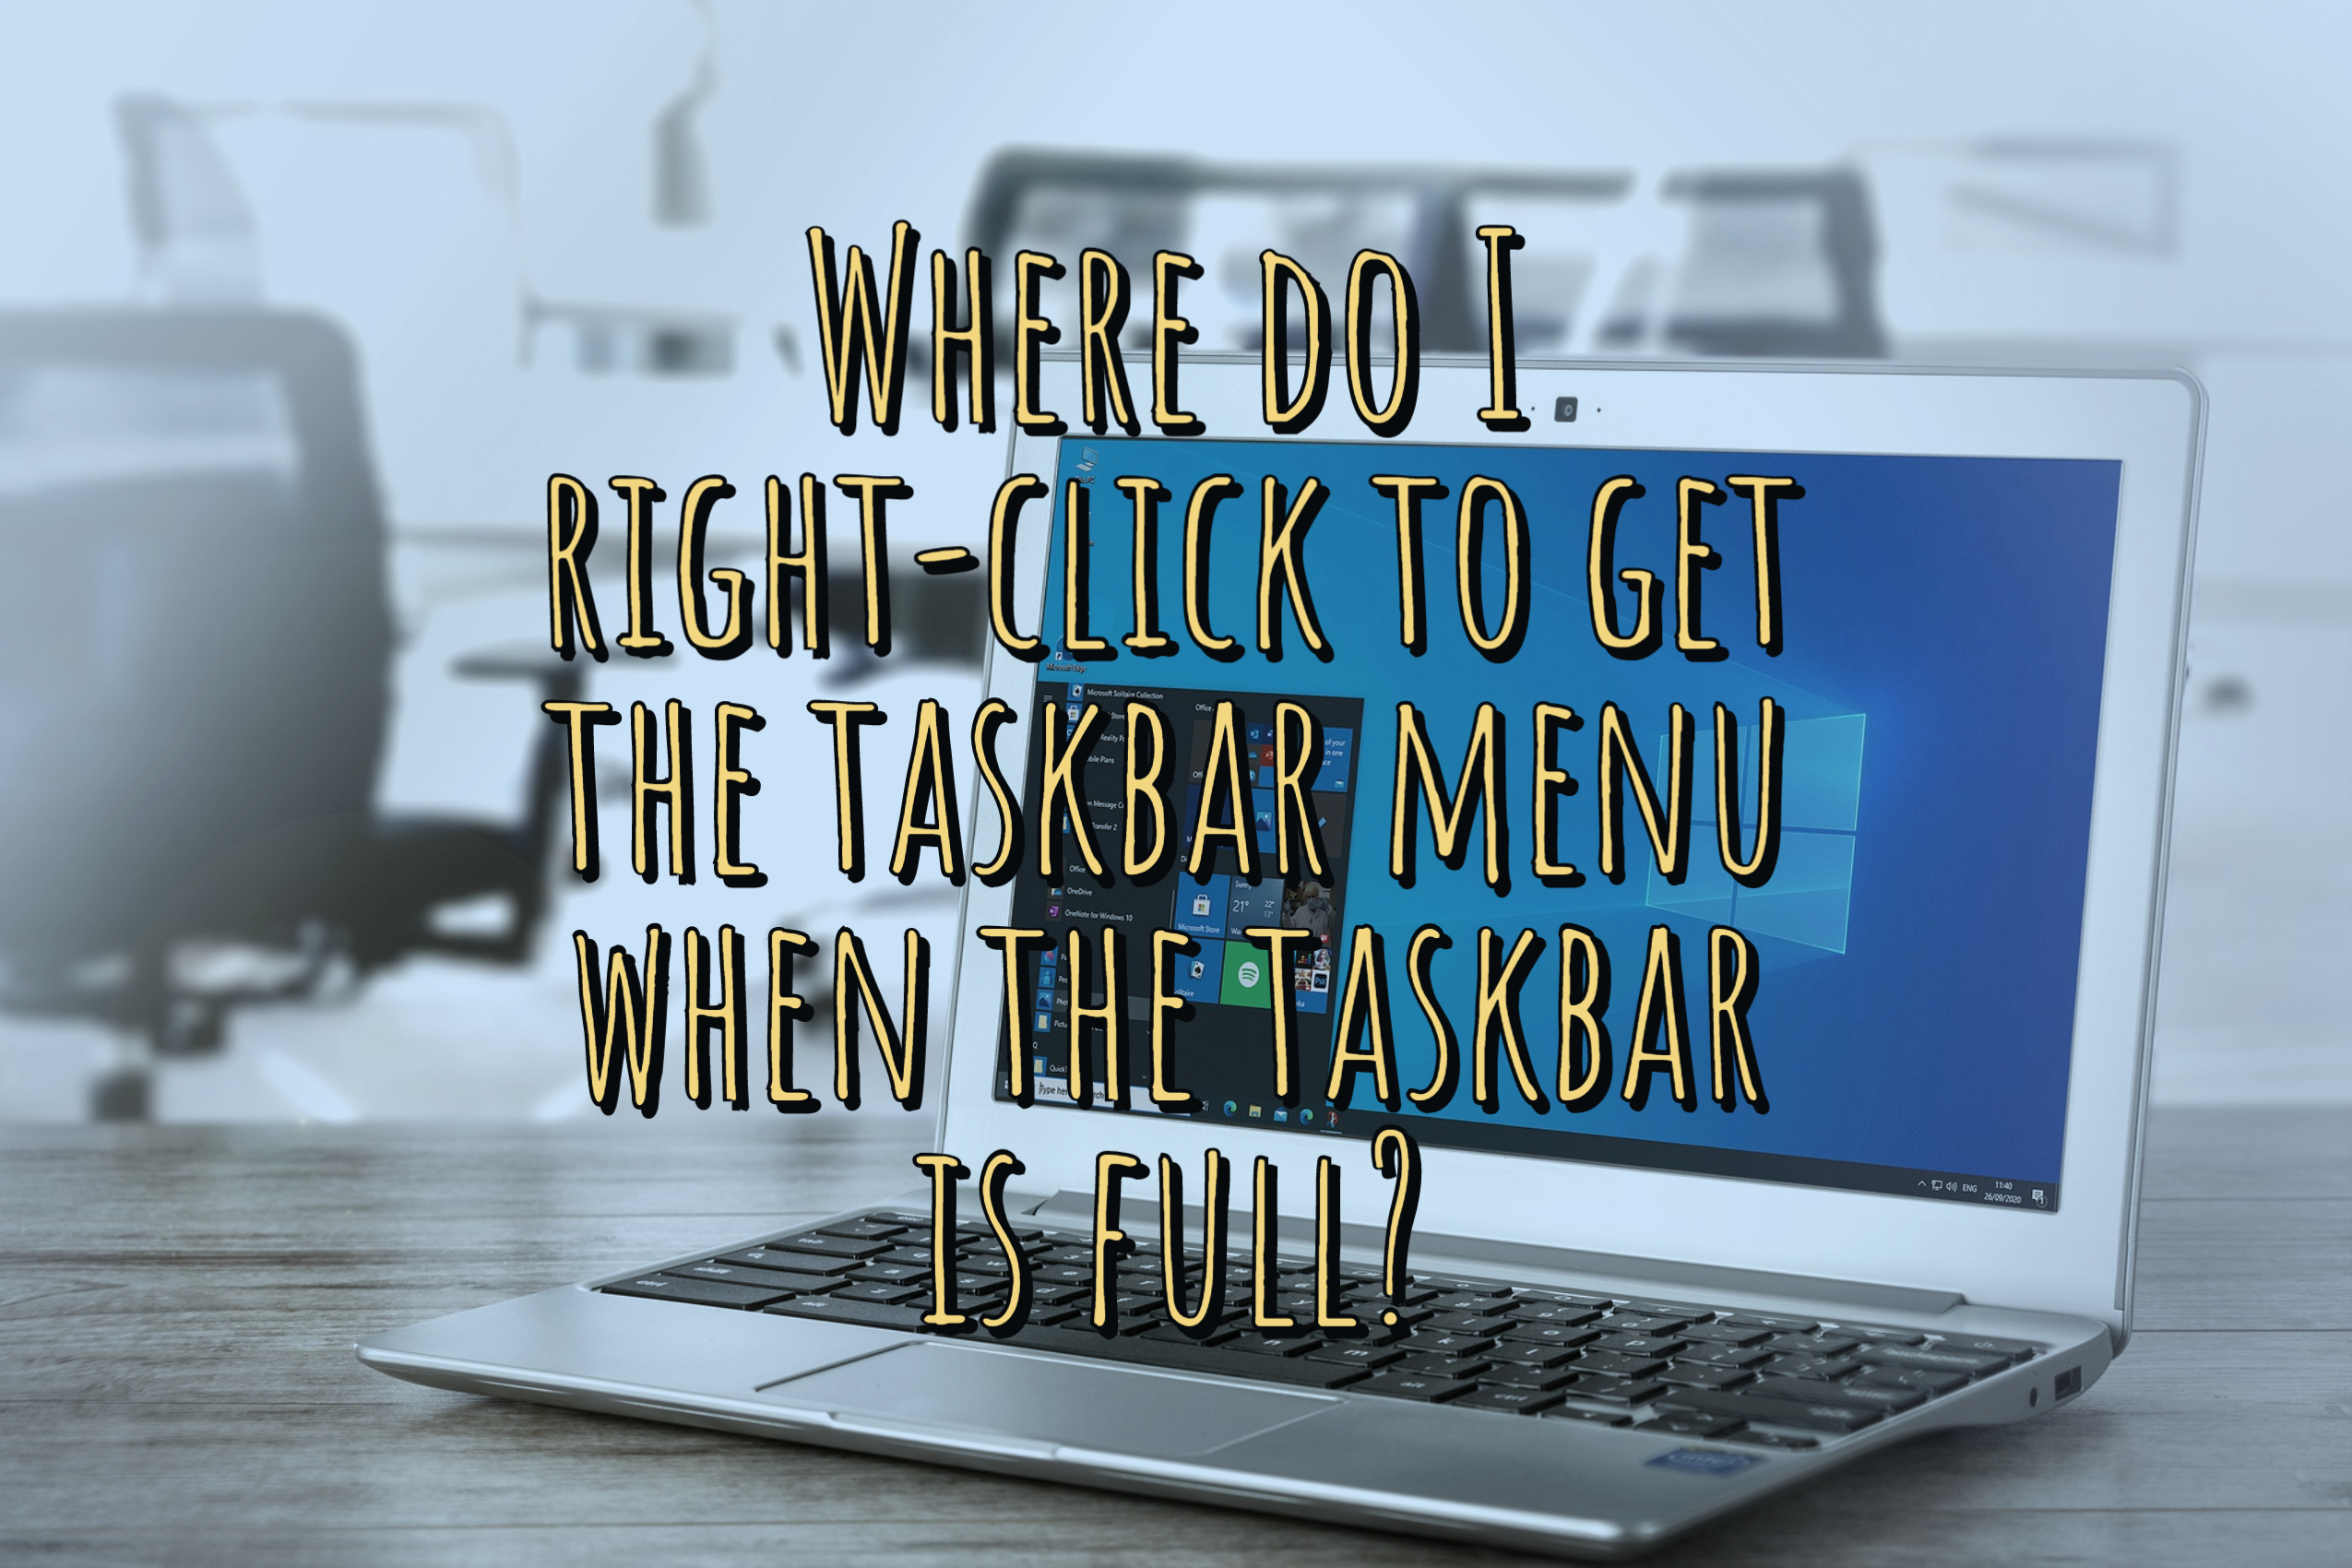 Where do I right-click to get the taskbar menu when the taskbar is full?